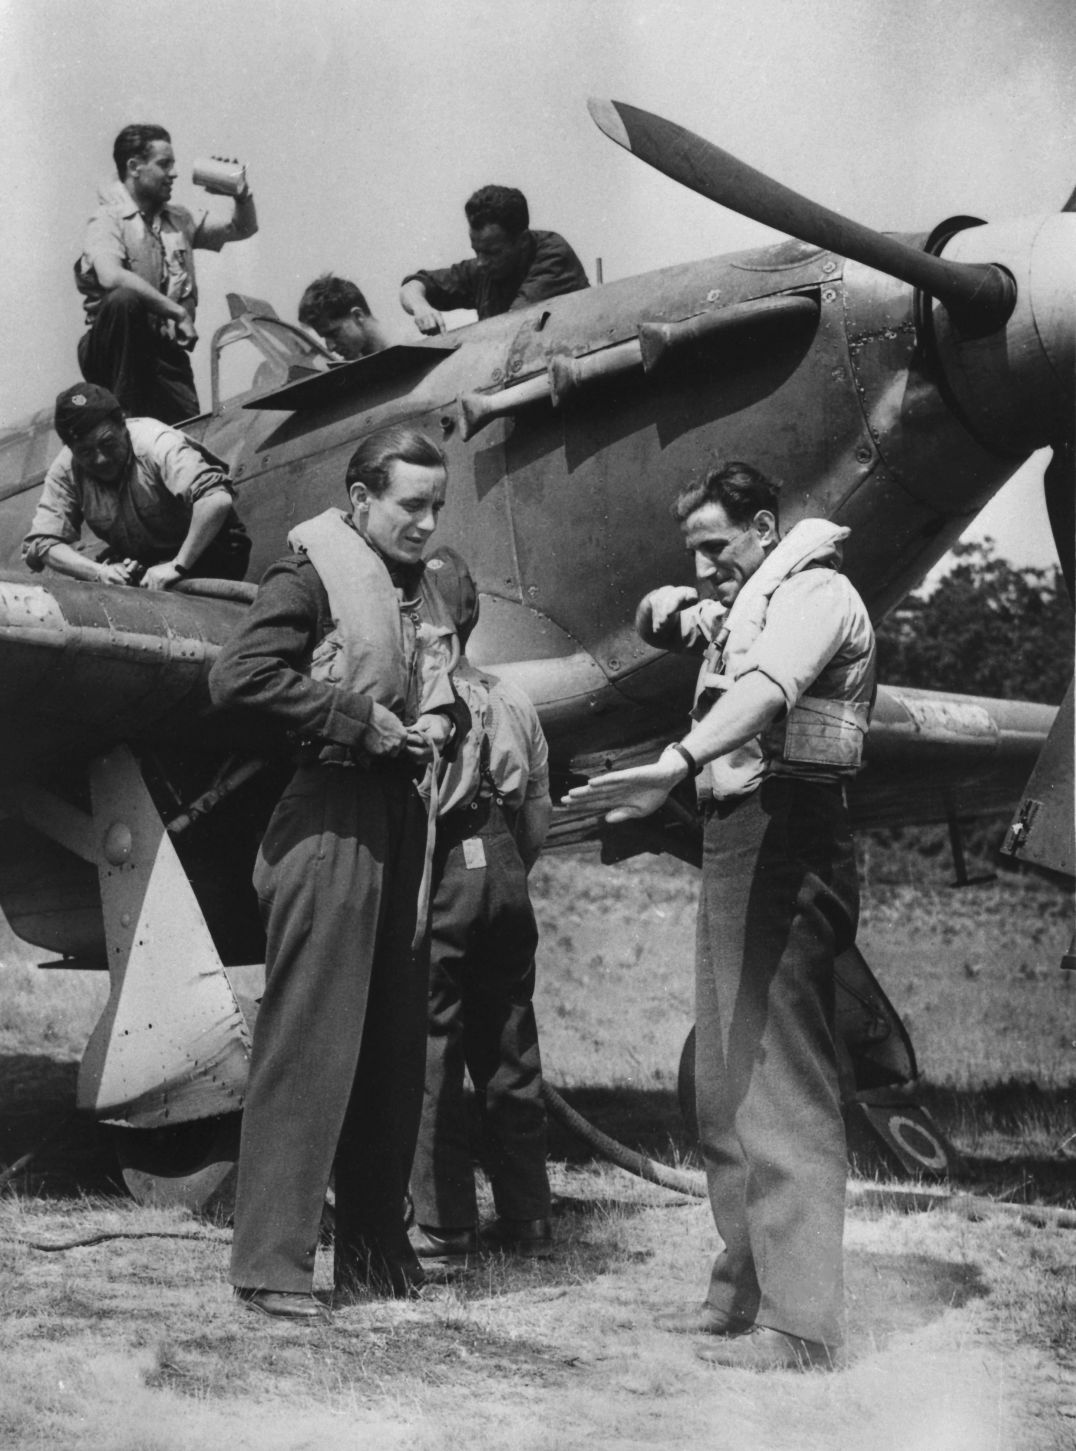 Leopold Šrom vpravo v hovoru s Františkem, pozemní personál ošetřuje Hurricane Mk. II, rok 1941